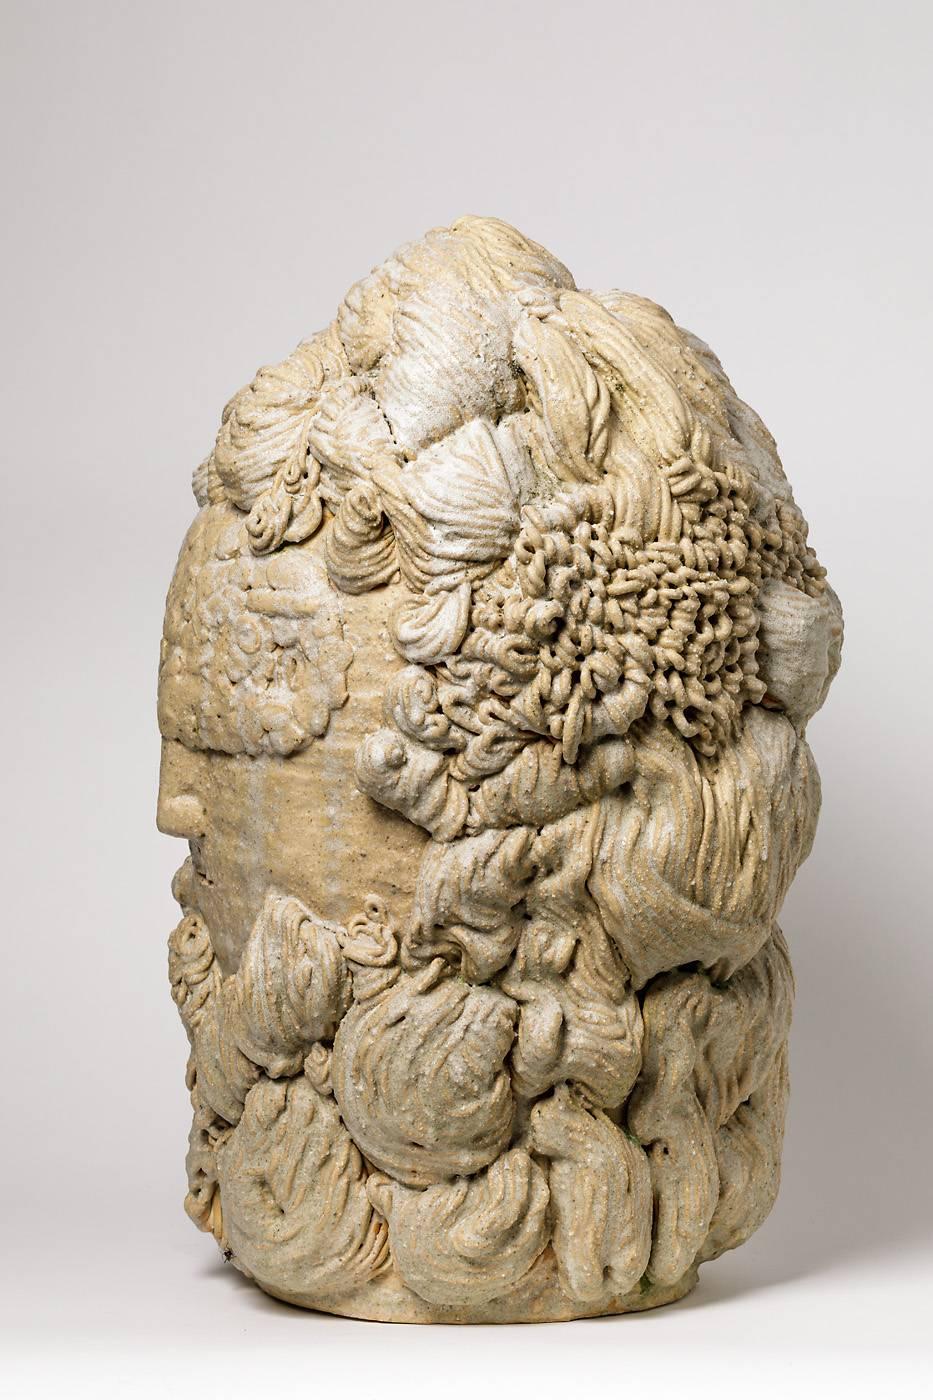 Contemporary Unique Stoneware Sculpture by Laurent Dufour and Marit Kathriner, 2016